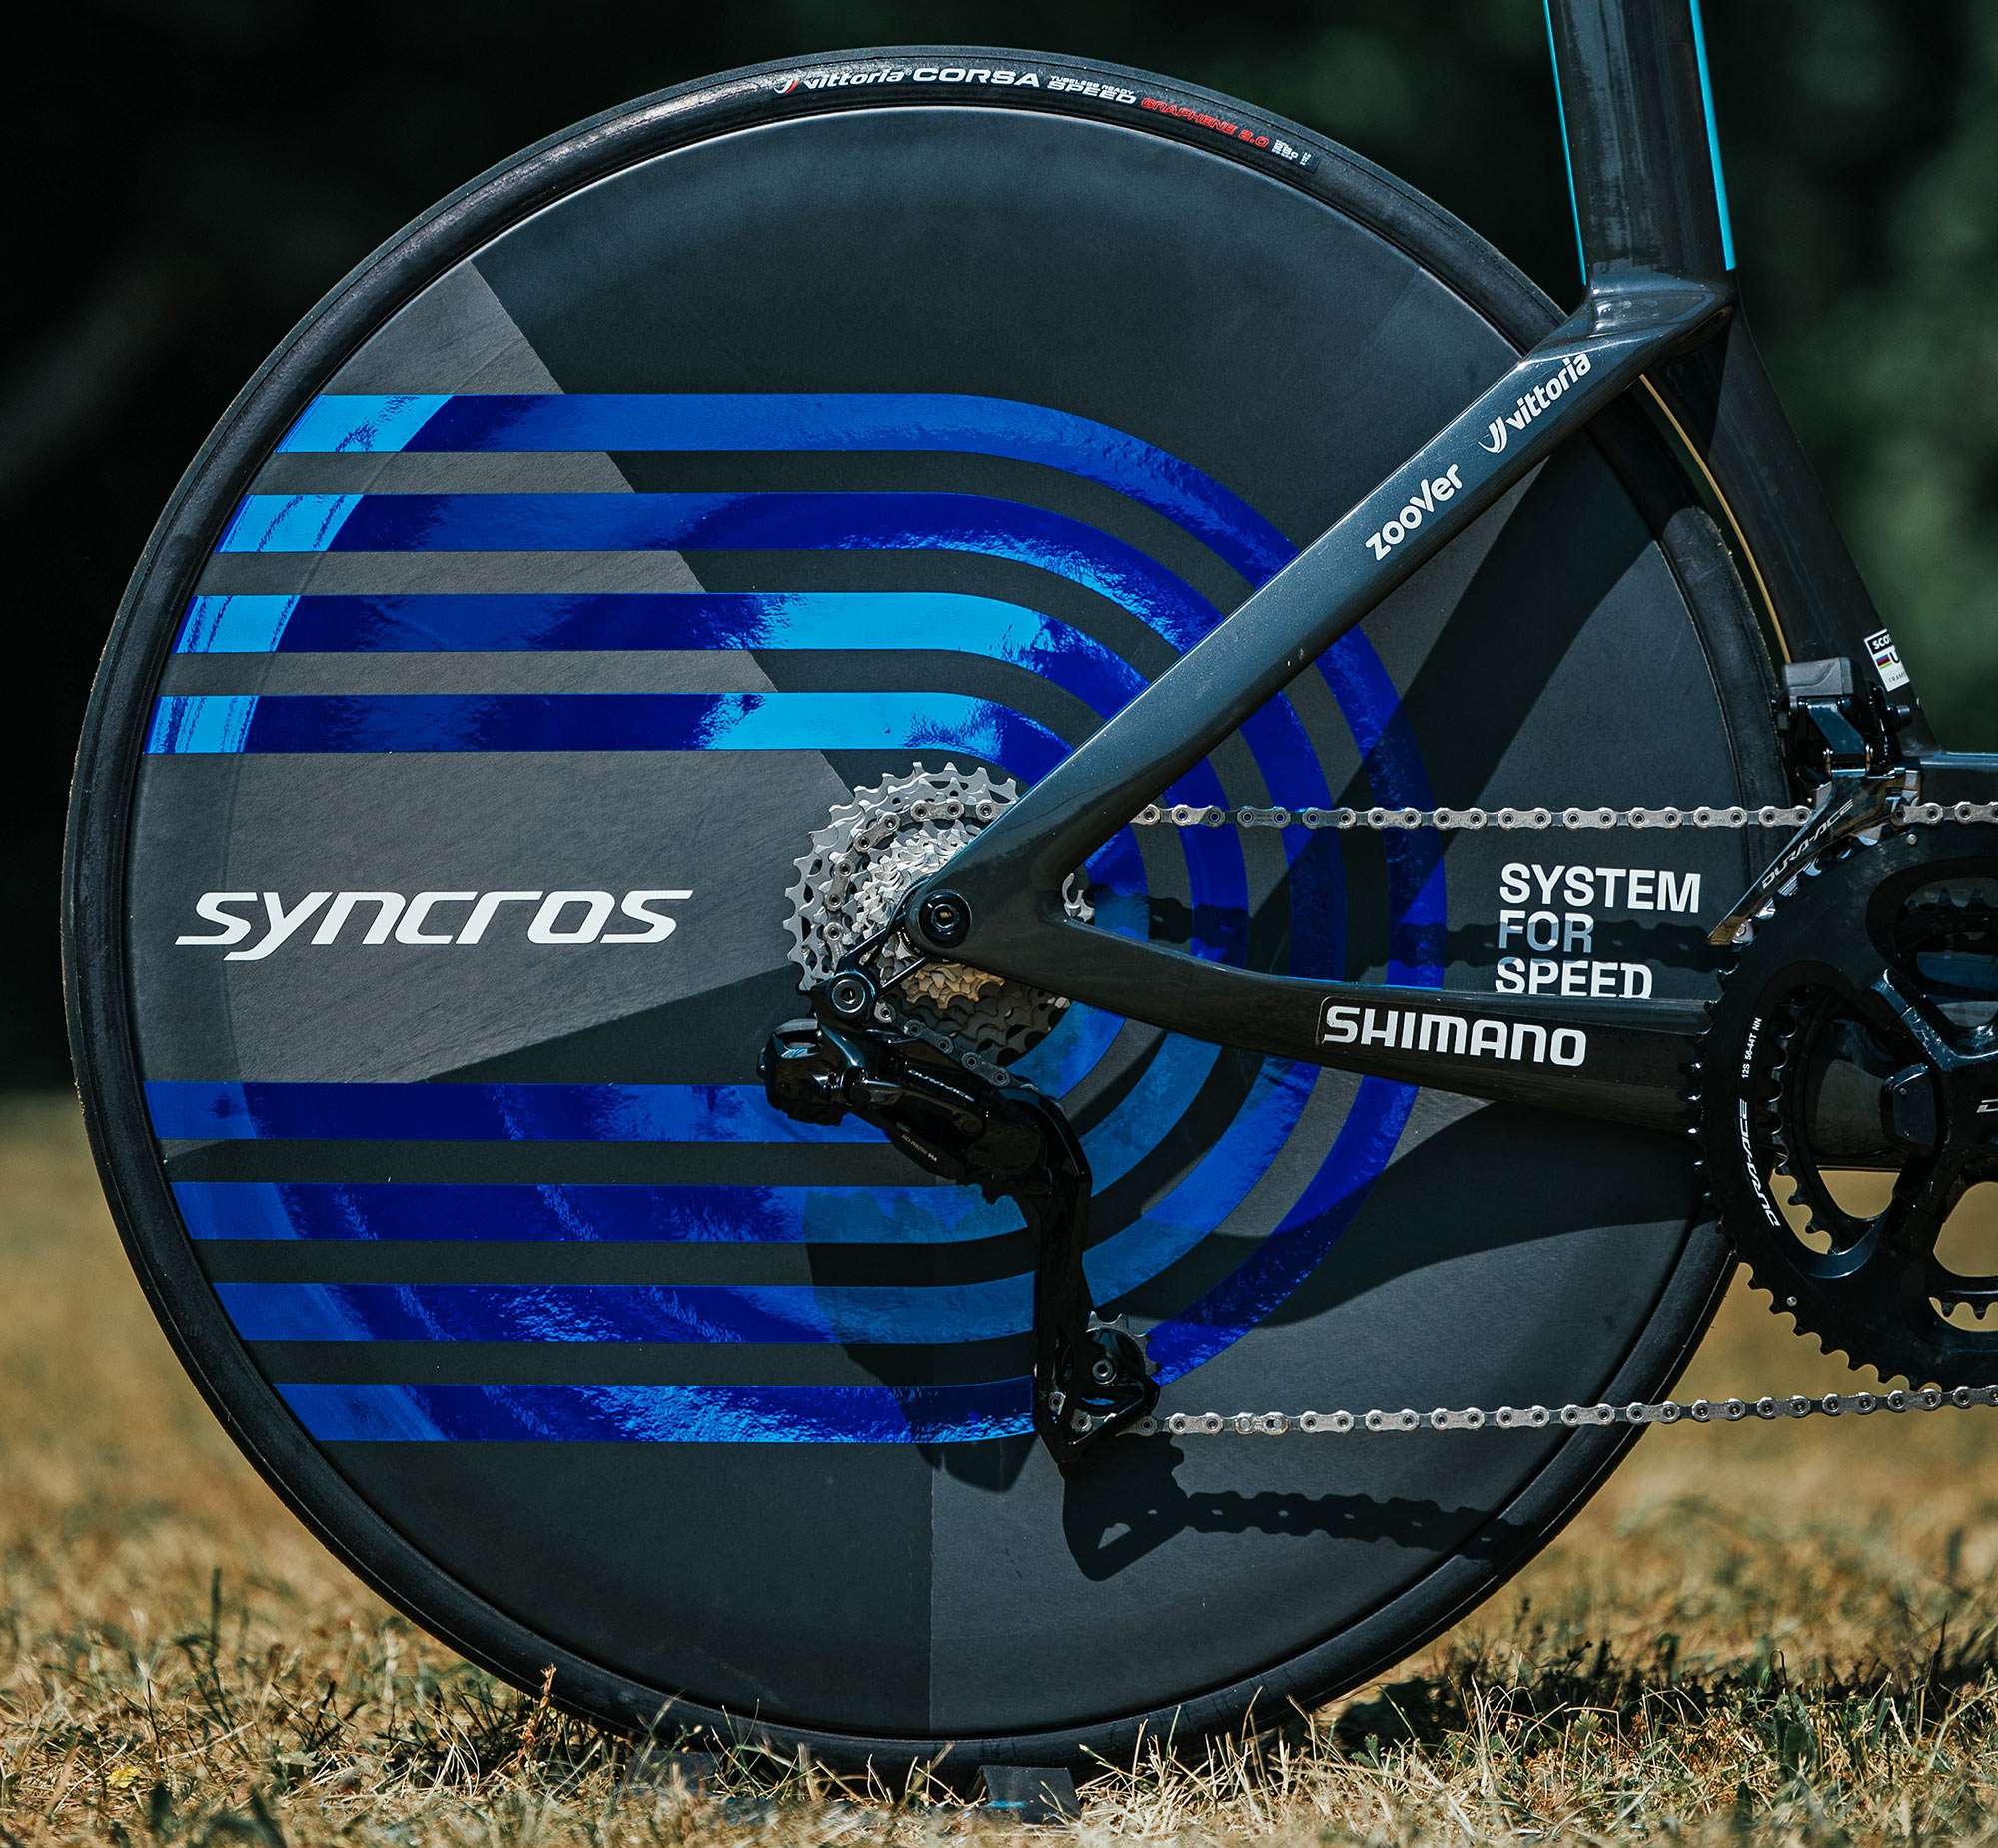 Syncros Capital SL TT Disc, full-carbon monocoque road time trial wheels for DSM, photo by El Toro Media, custom Disc rear wheel